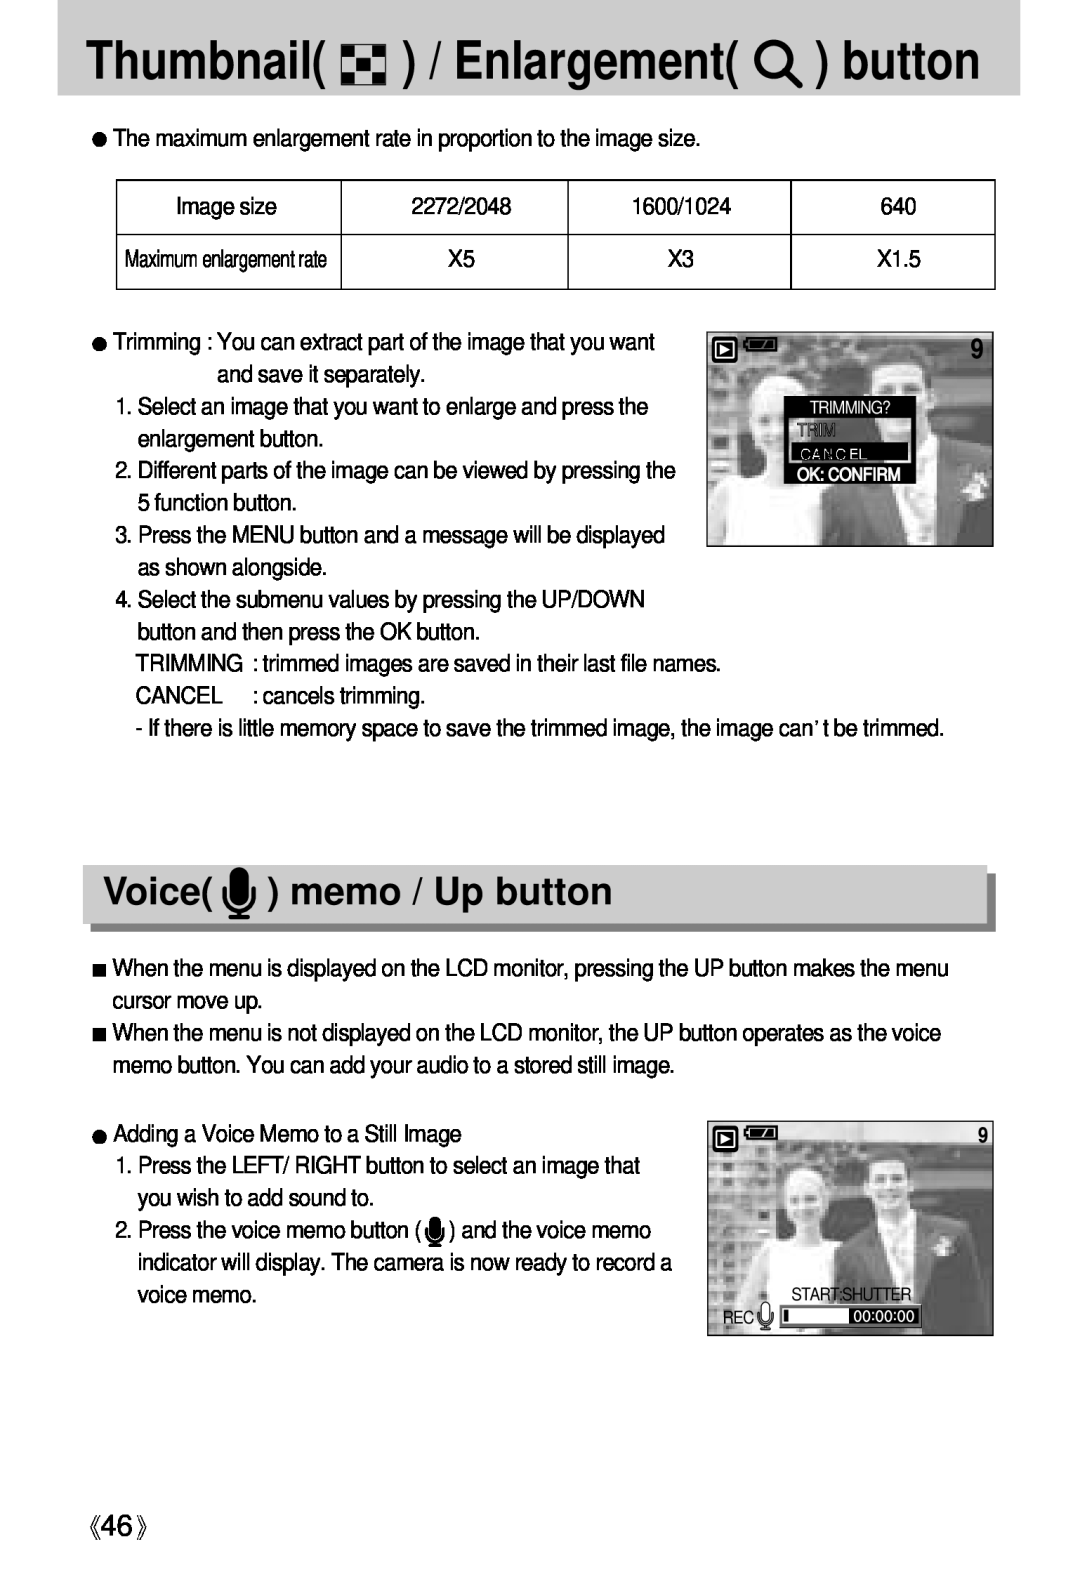 Samsung Digimax U-CA user manual Thumbnail / Enlargement button, Voice memo / Up button 